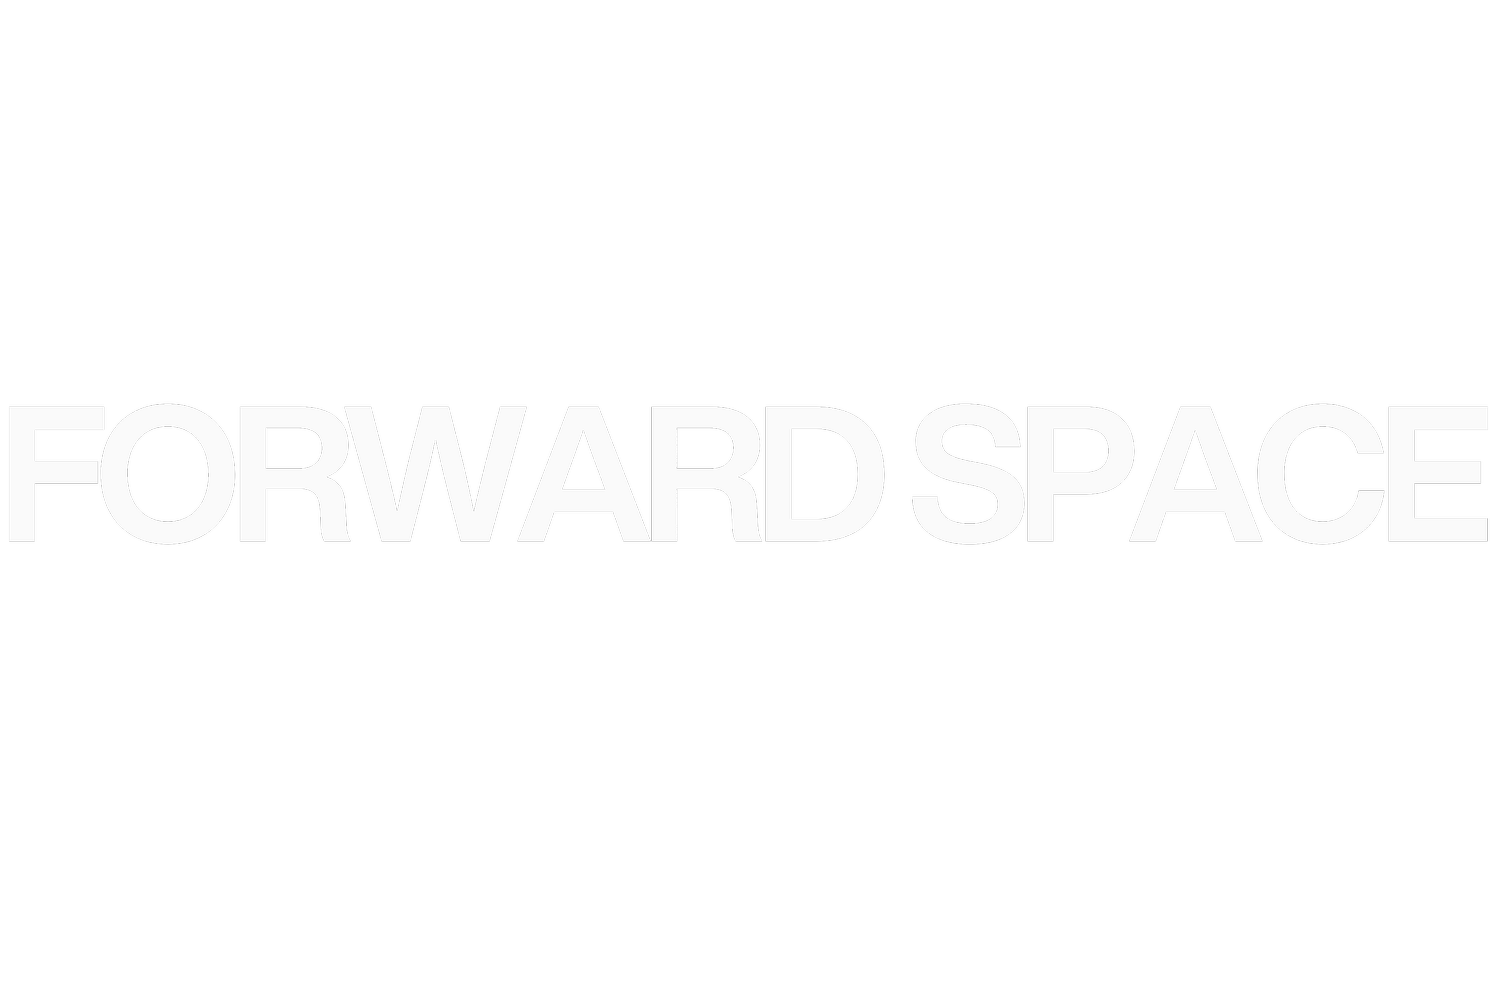 FORWARD SPACE